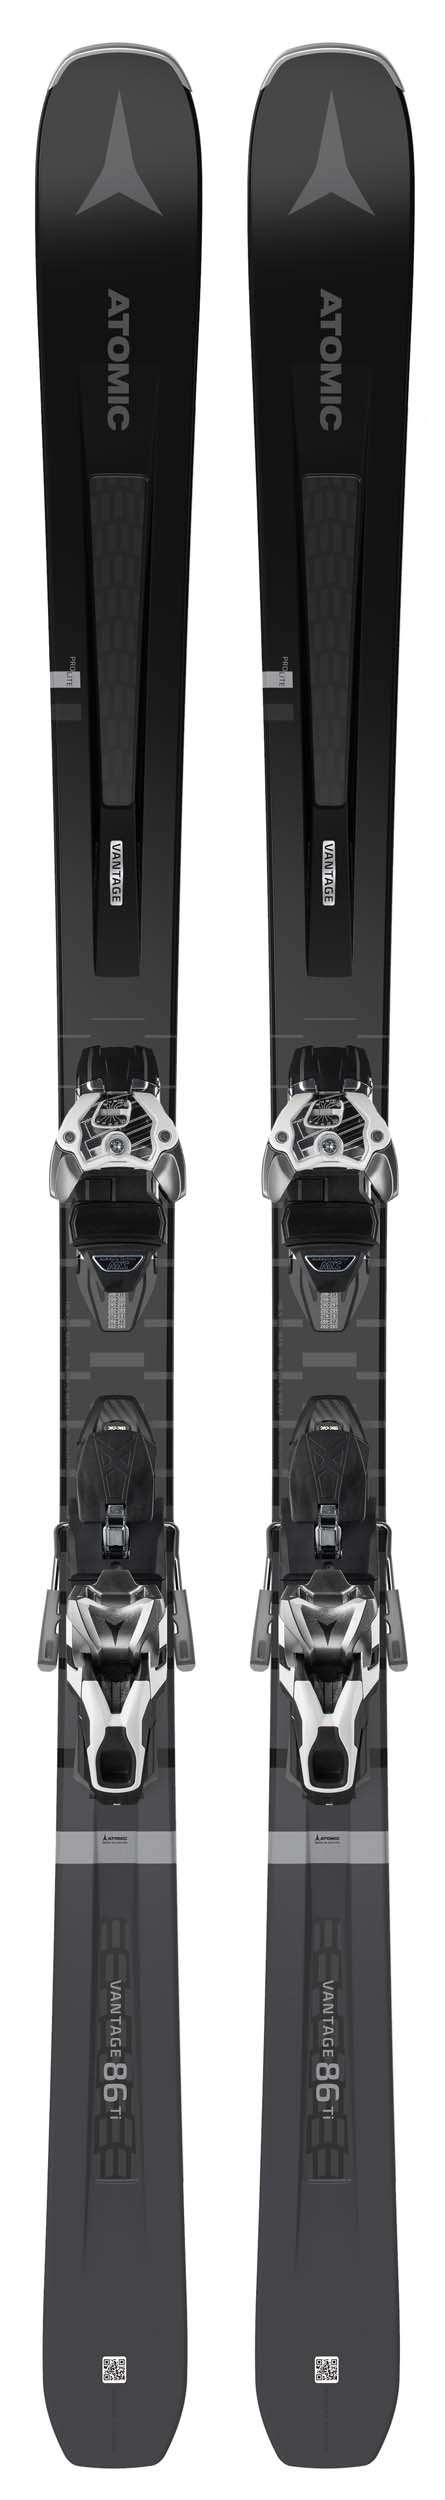 Atomic 2021 Vantage 86 TI Skis w/ Warden 13 MNC Bindings NEW !! 181cm